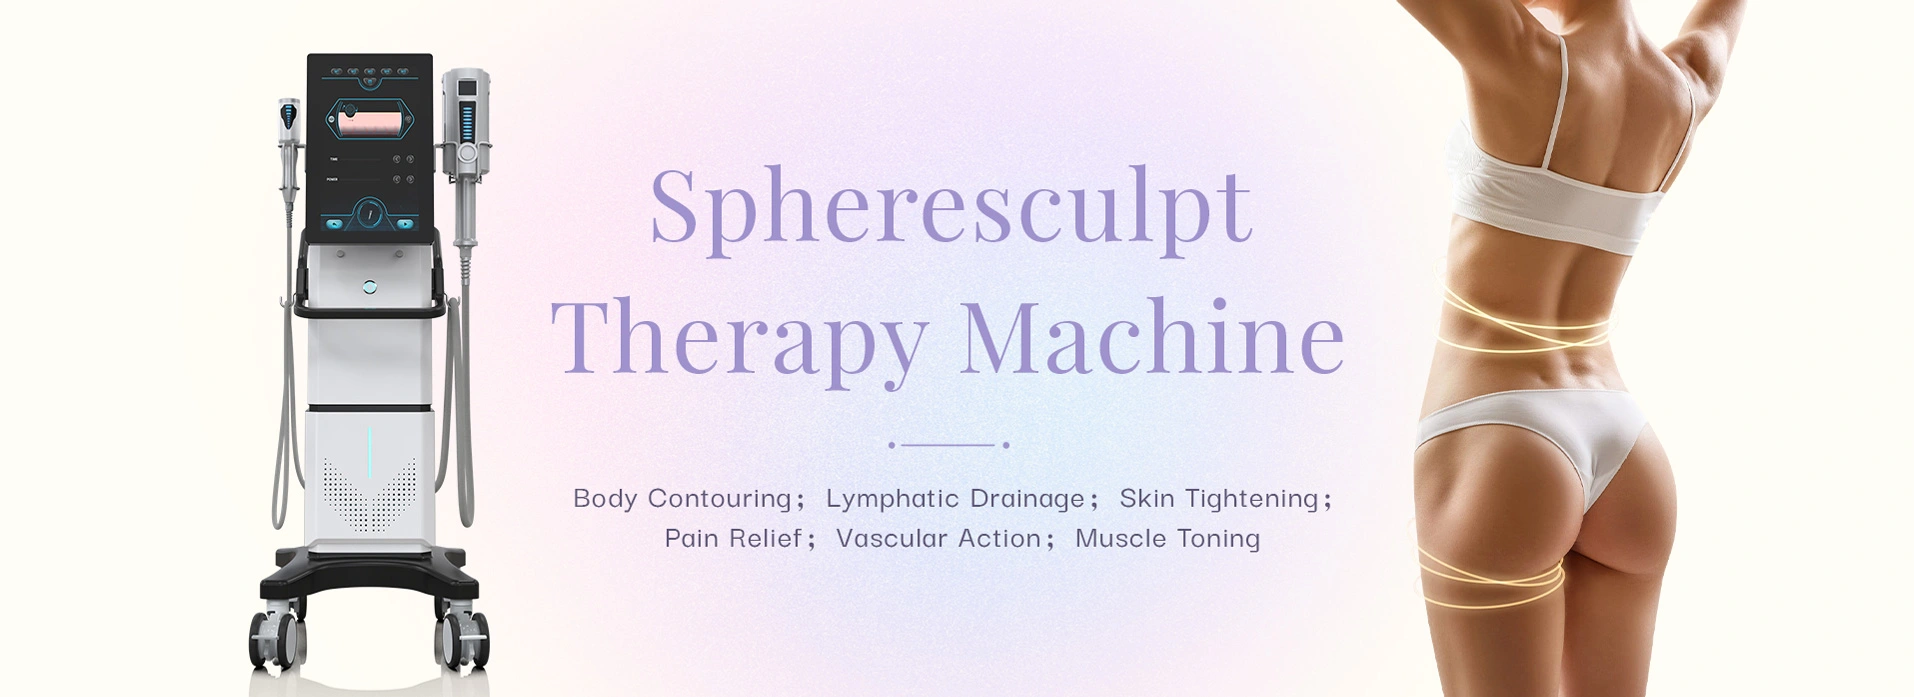 Spheresculpt therapy machine